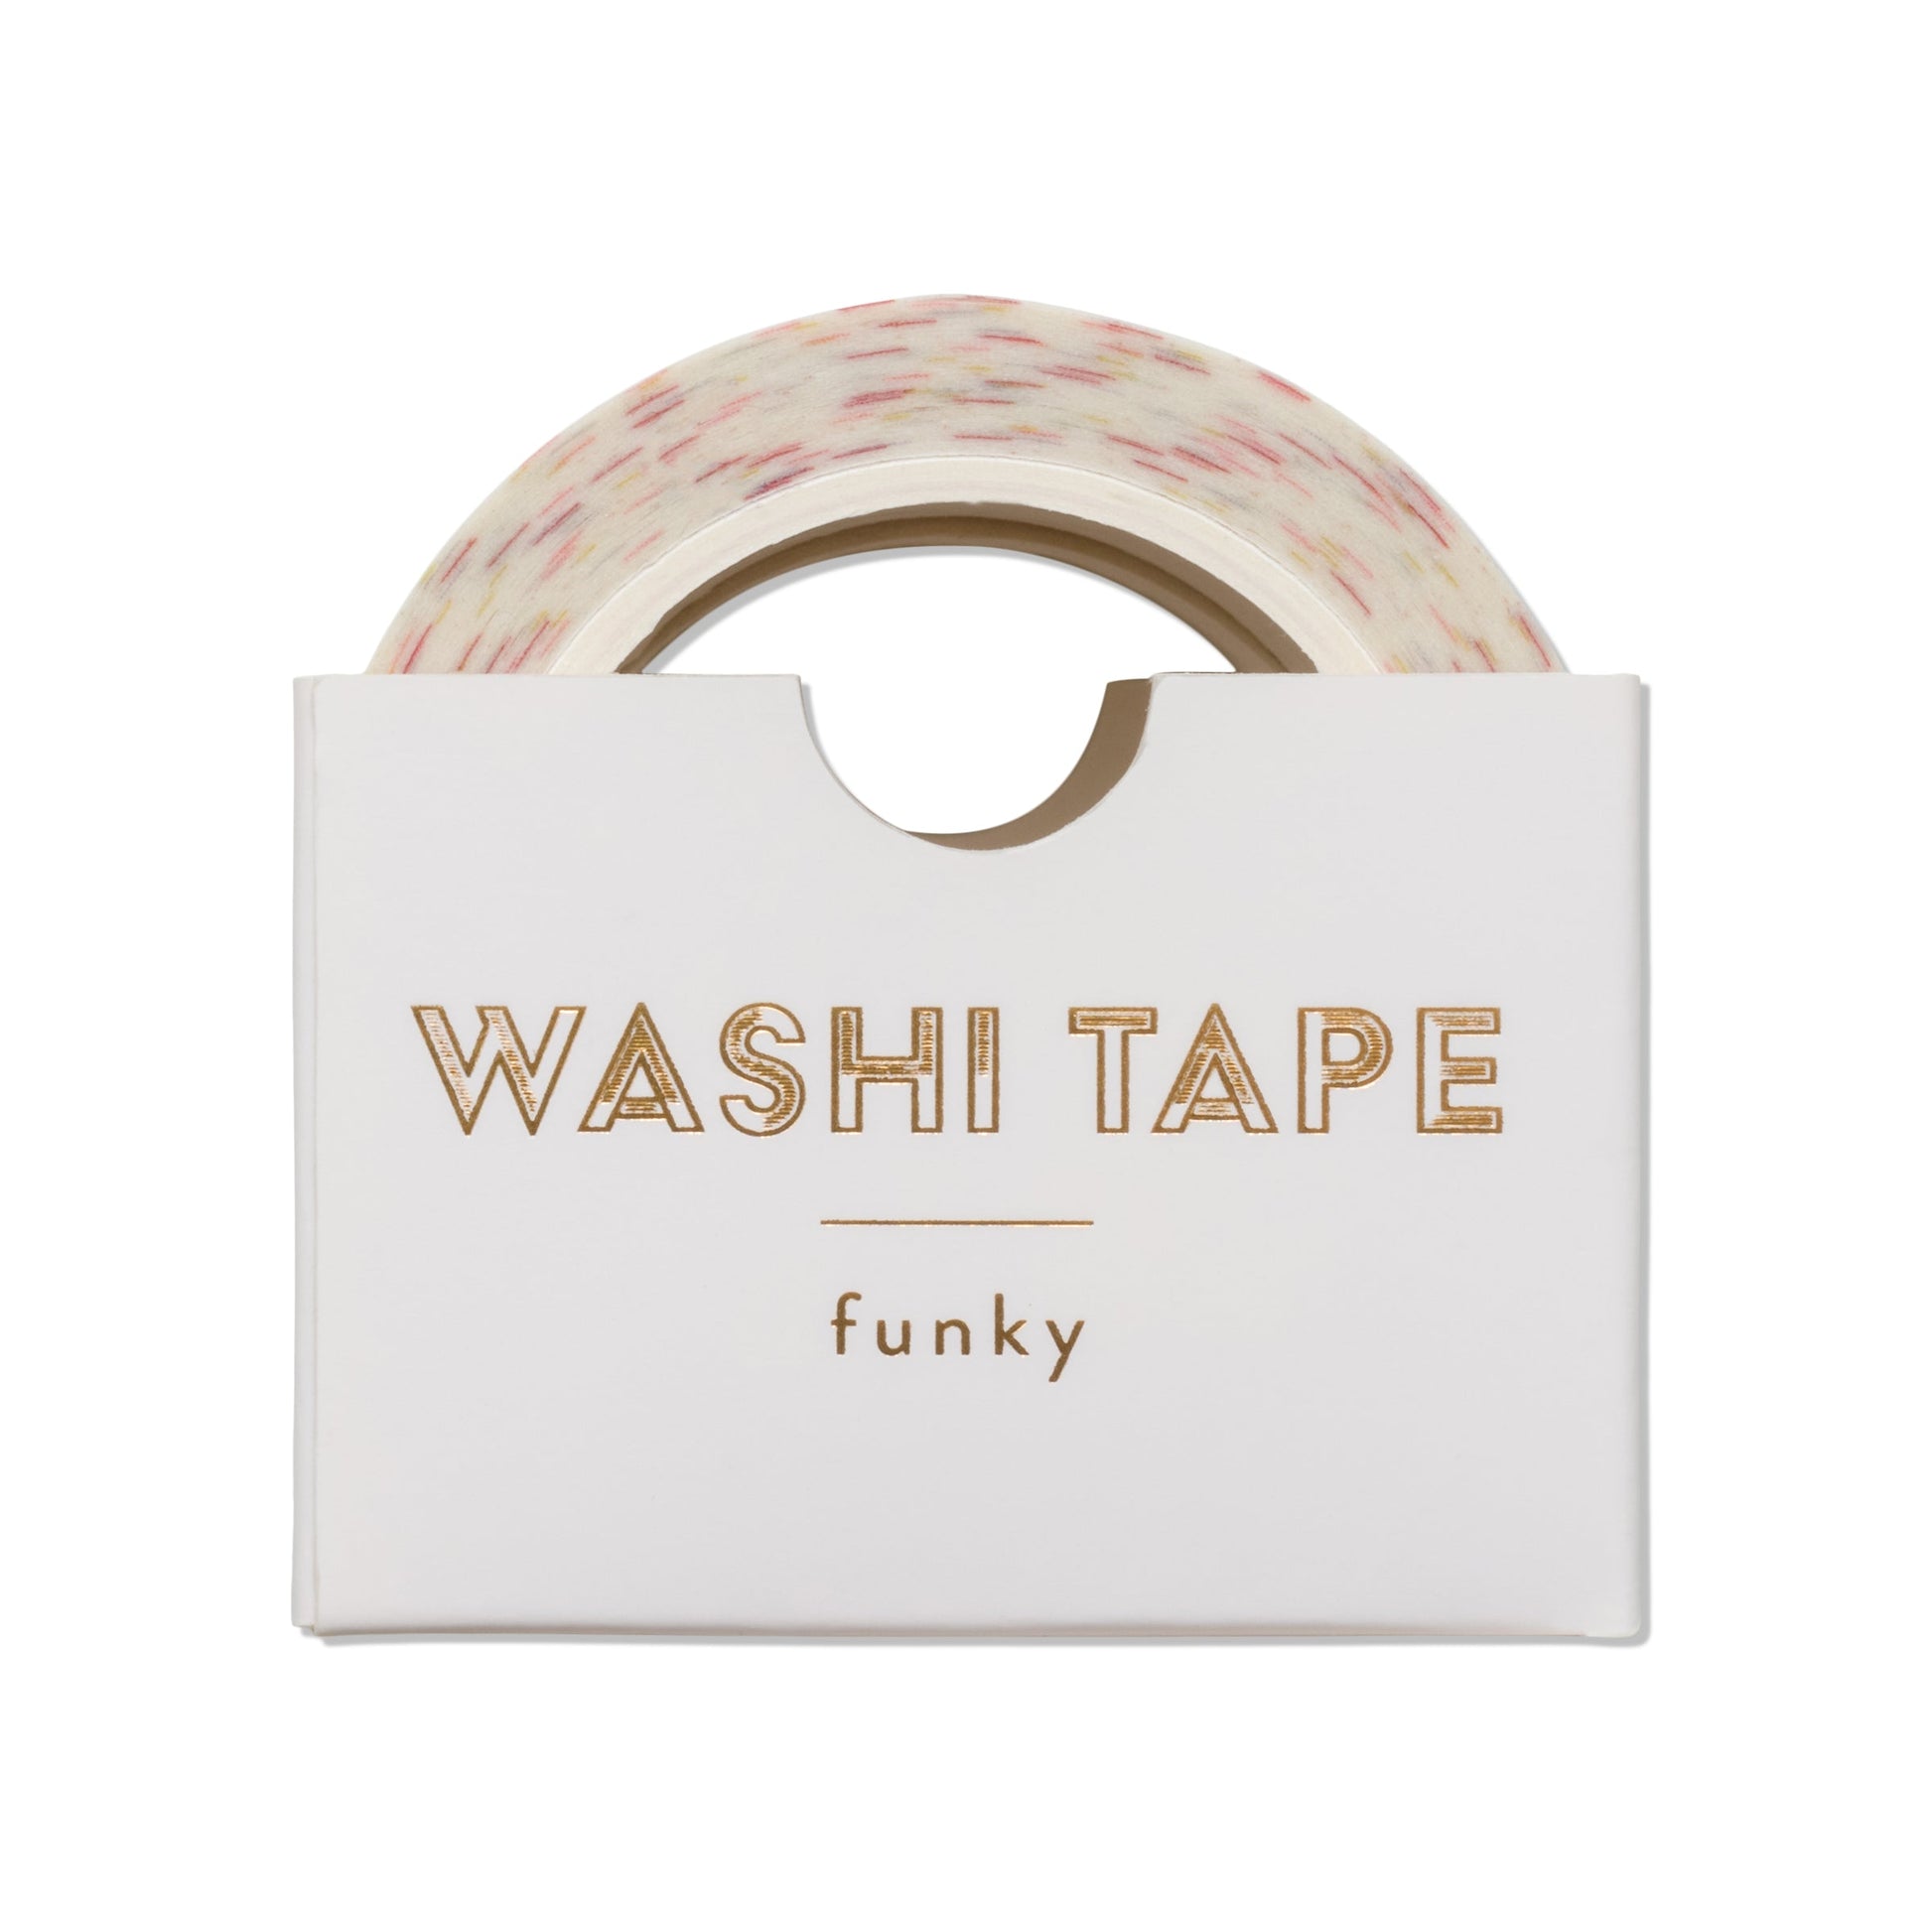 Designer Washi Tape Duo - Colorful & Neutral Rolls | Signature Design -  Pair of Decorative, Cute Adhesive Tape for Customizing Notebooks,  Calendars